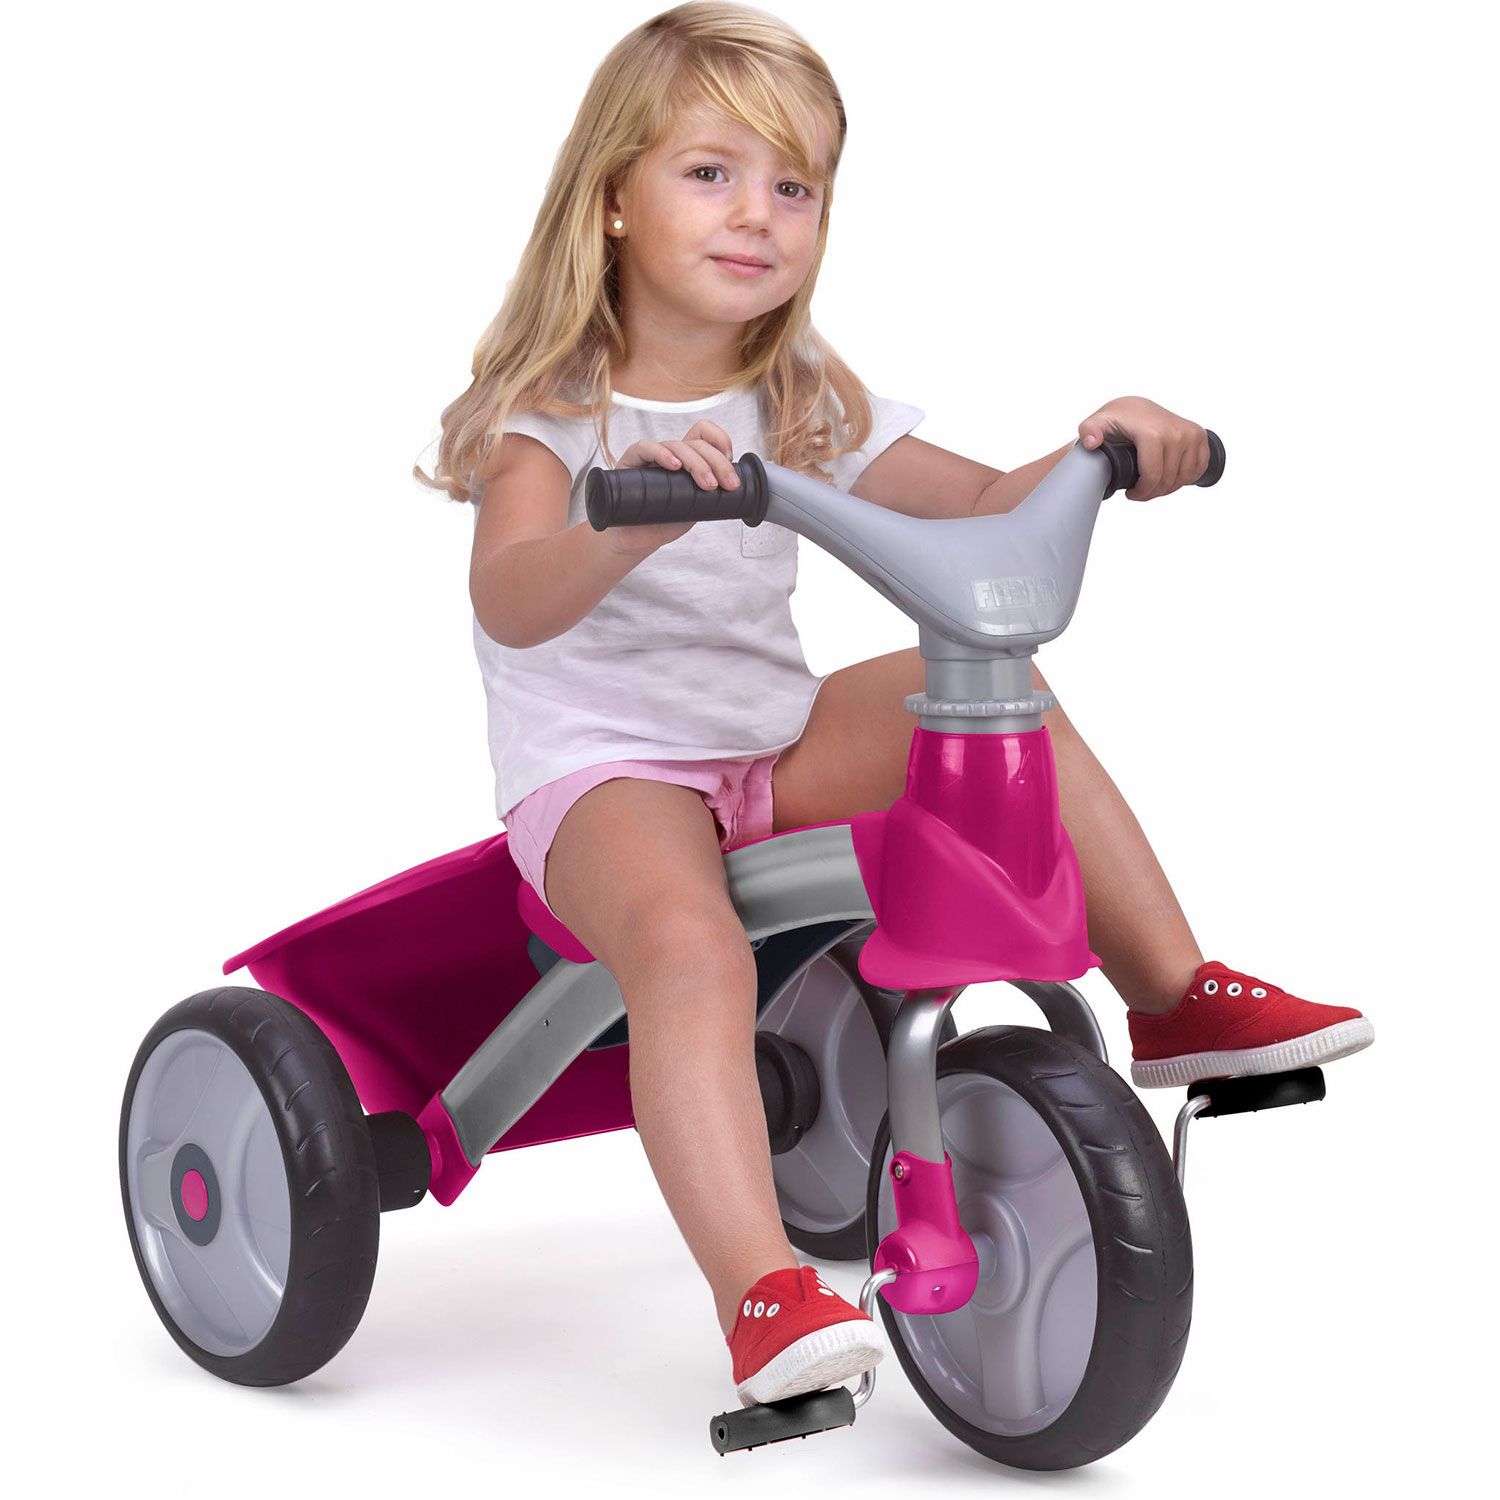 Baby Trike Easy Evolution Pink